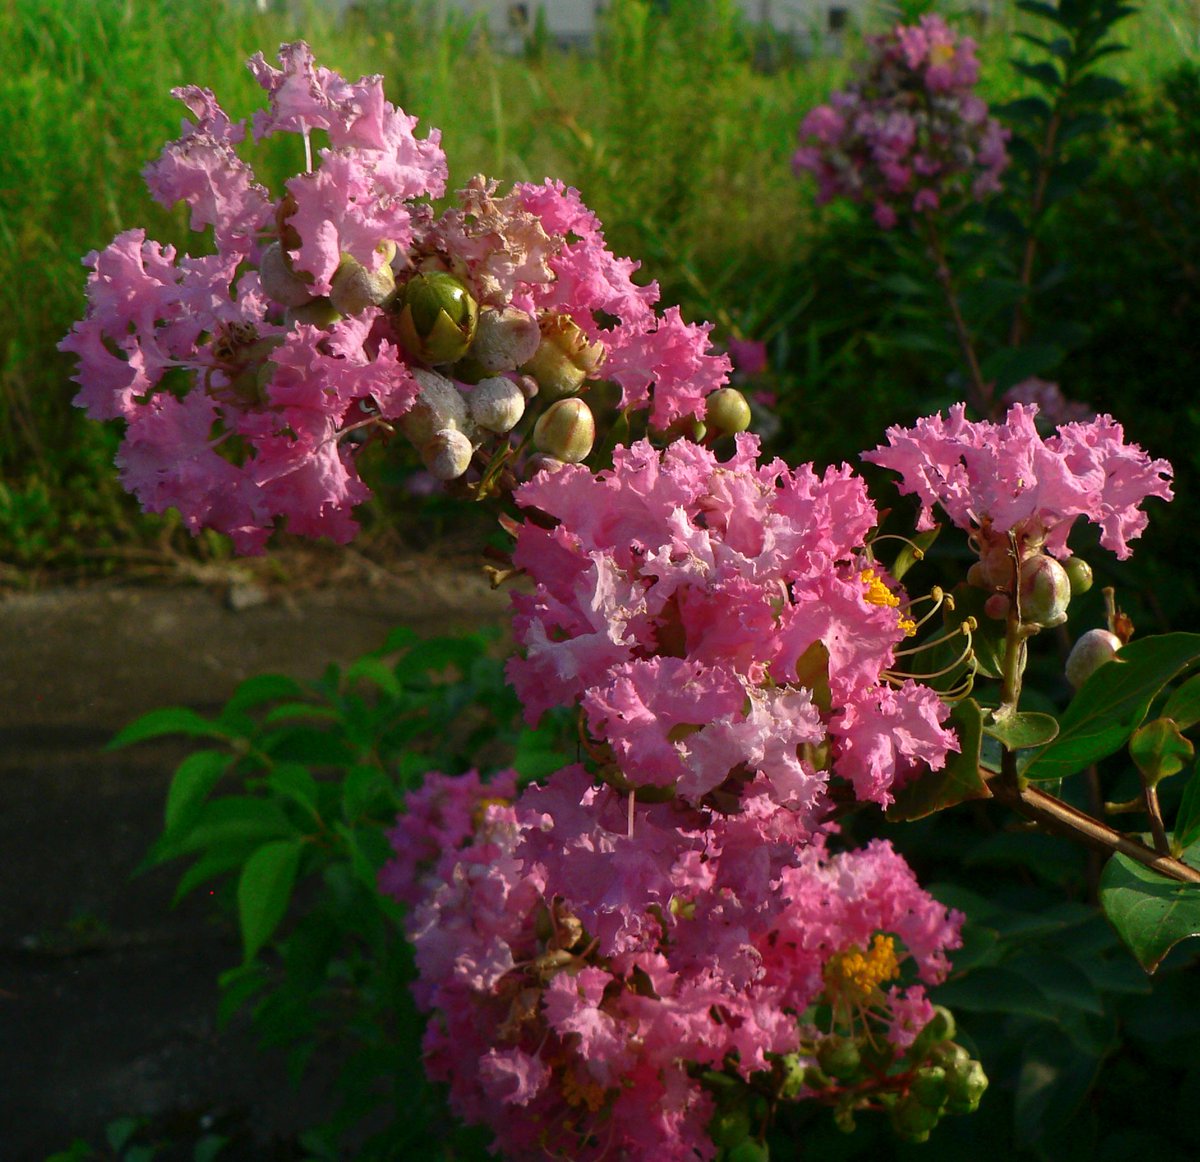 ট ইট র こころんグリーン うちの前の空き地に ピンク色のサルスベリの花が咲いていました ピンクのフリルで包まれたような 優しい花びらが綺麗です 夏のこの時期 あちこちのお宅の庭で見かける花です サルスベリ ピンク色 フリル 花びら 夏の花